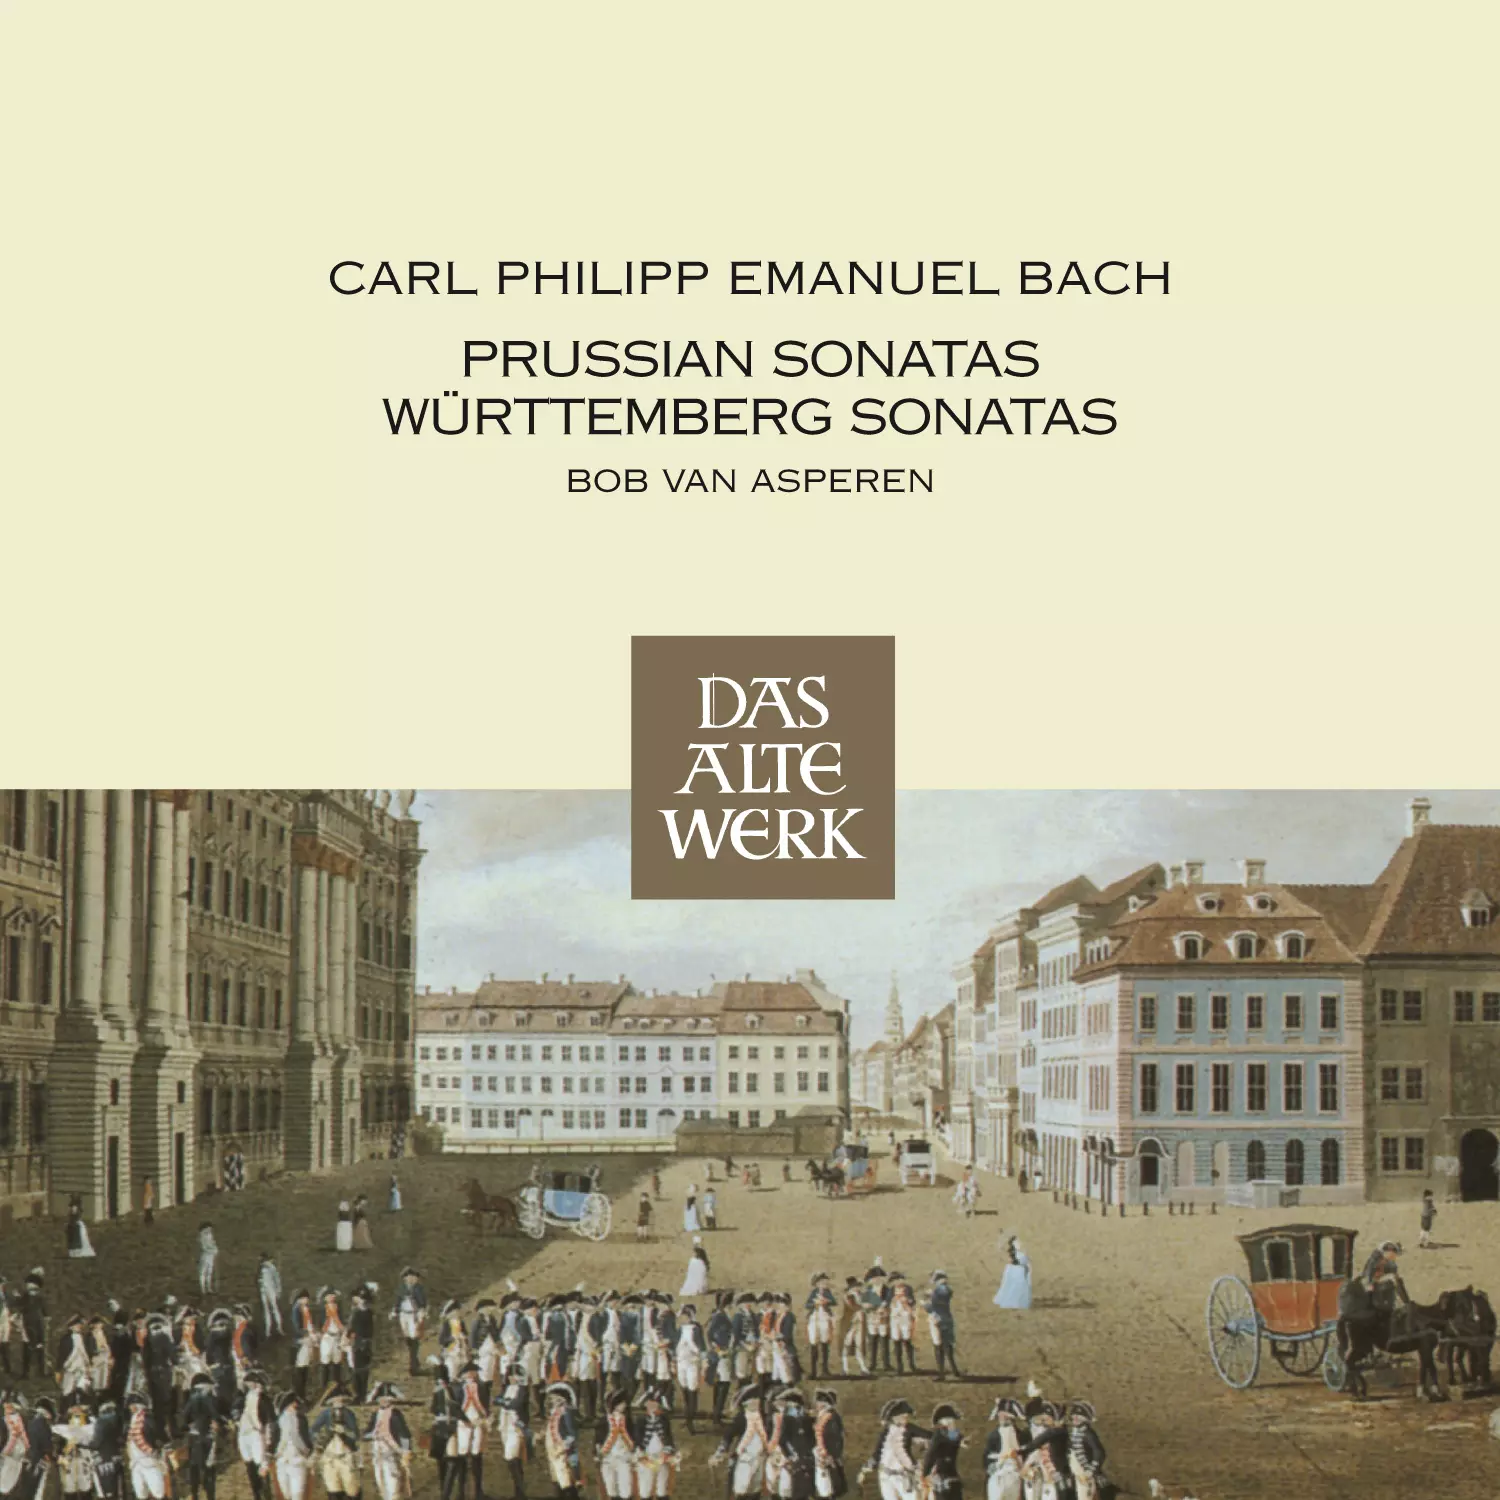 Prussian & Württemberg Sonatas